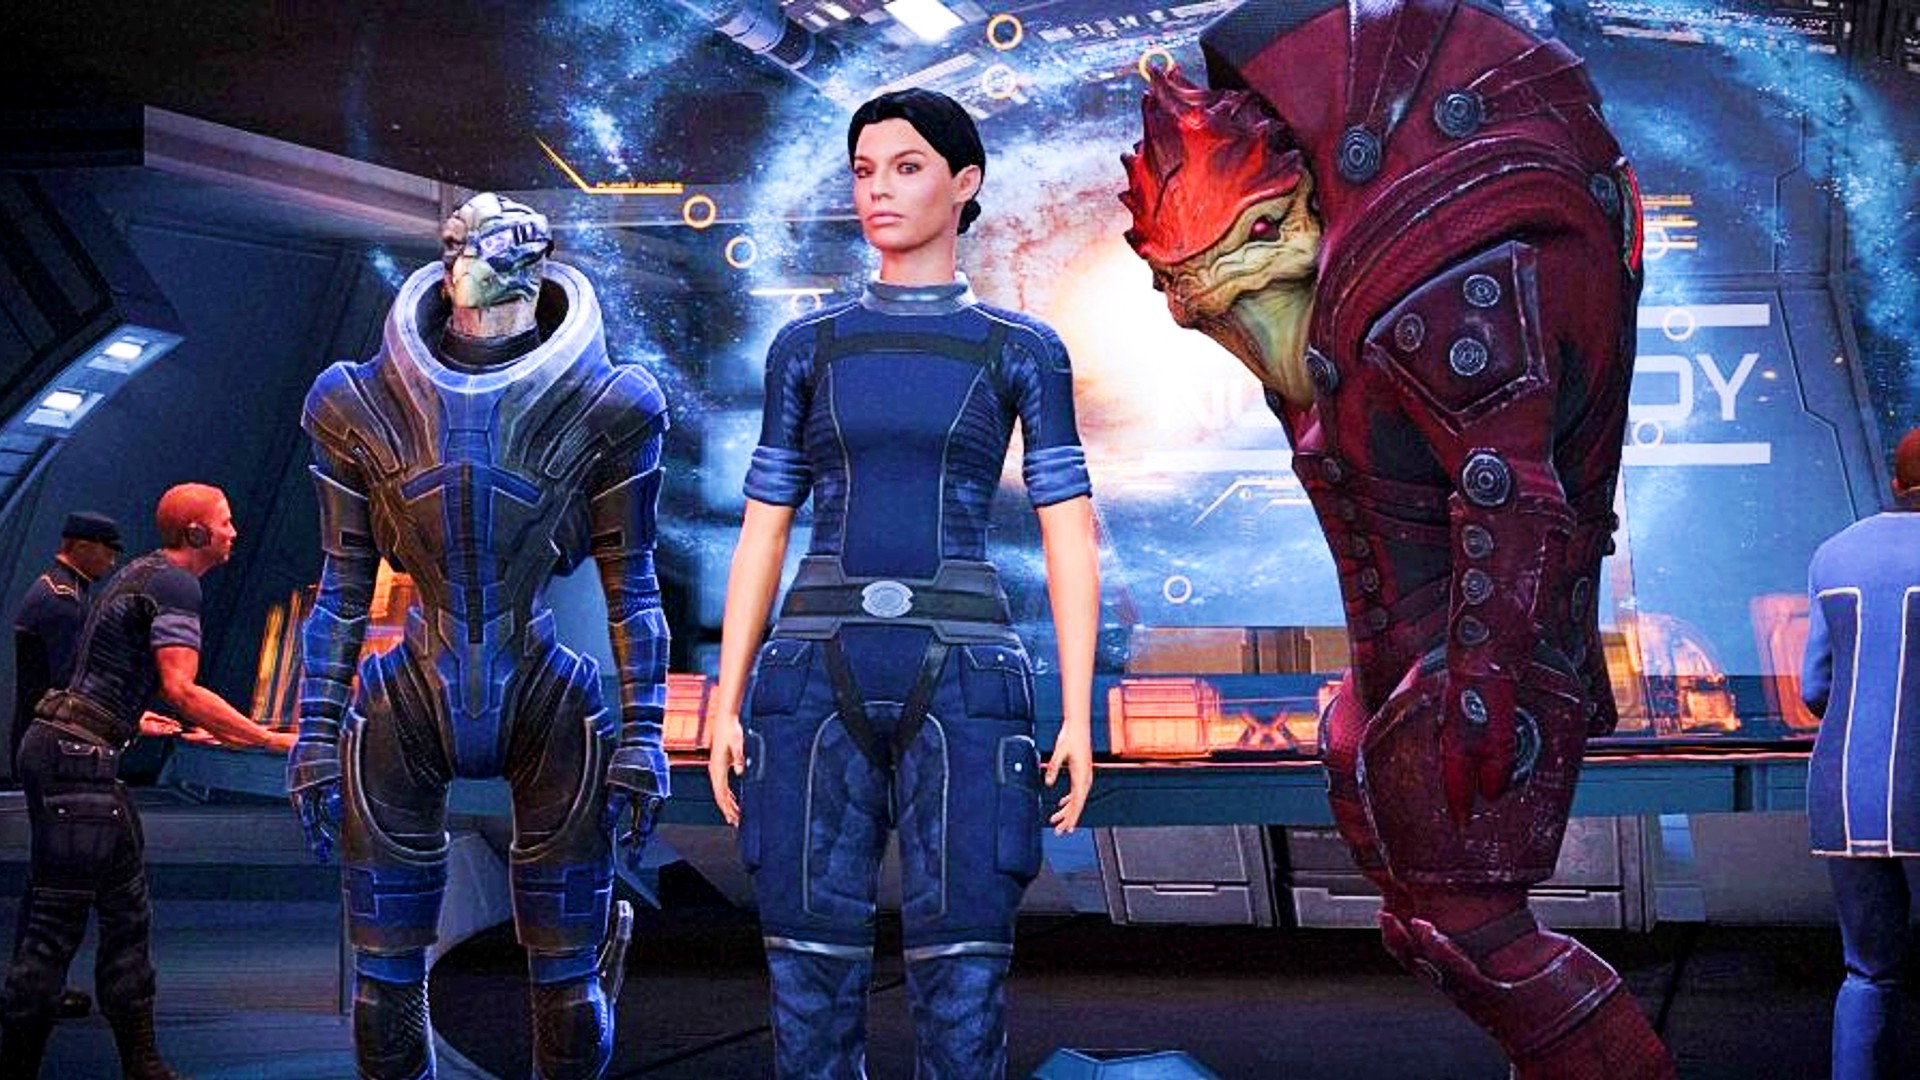 Best RPG games: Mass Effect Legendary Edition. Image shows a feminine human standing between two alien creatures.